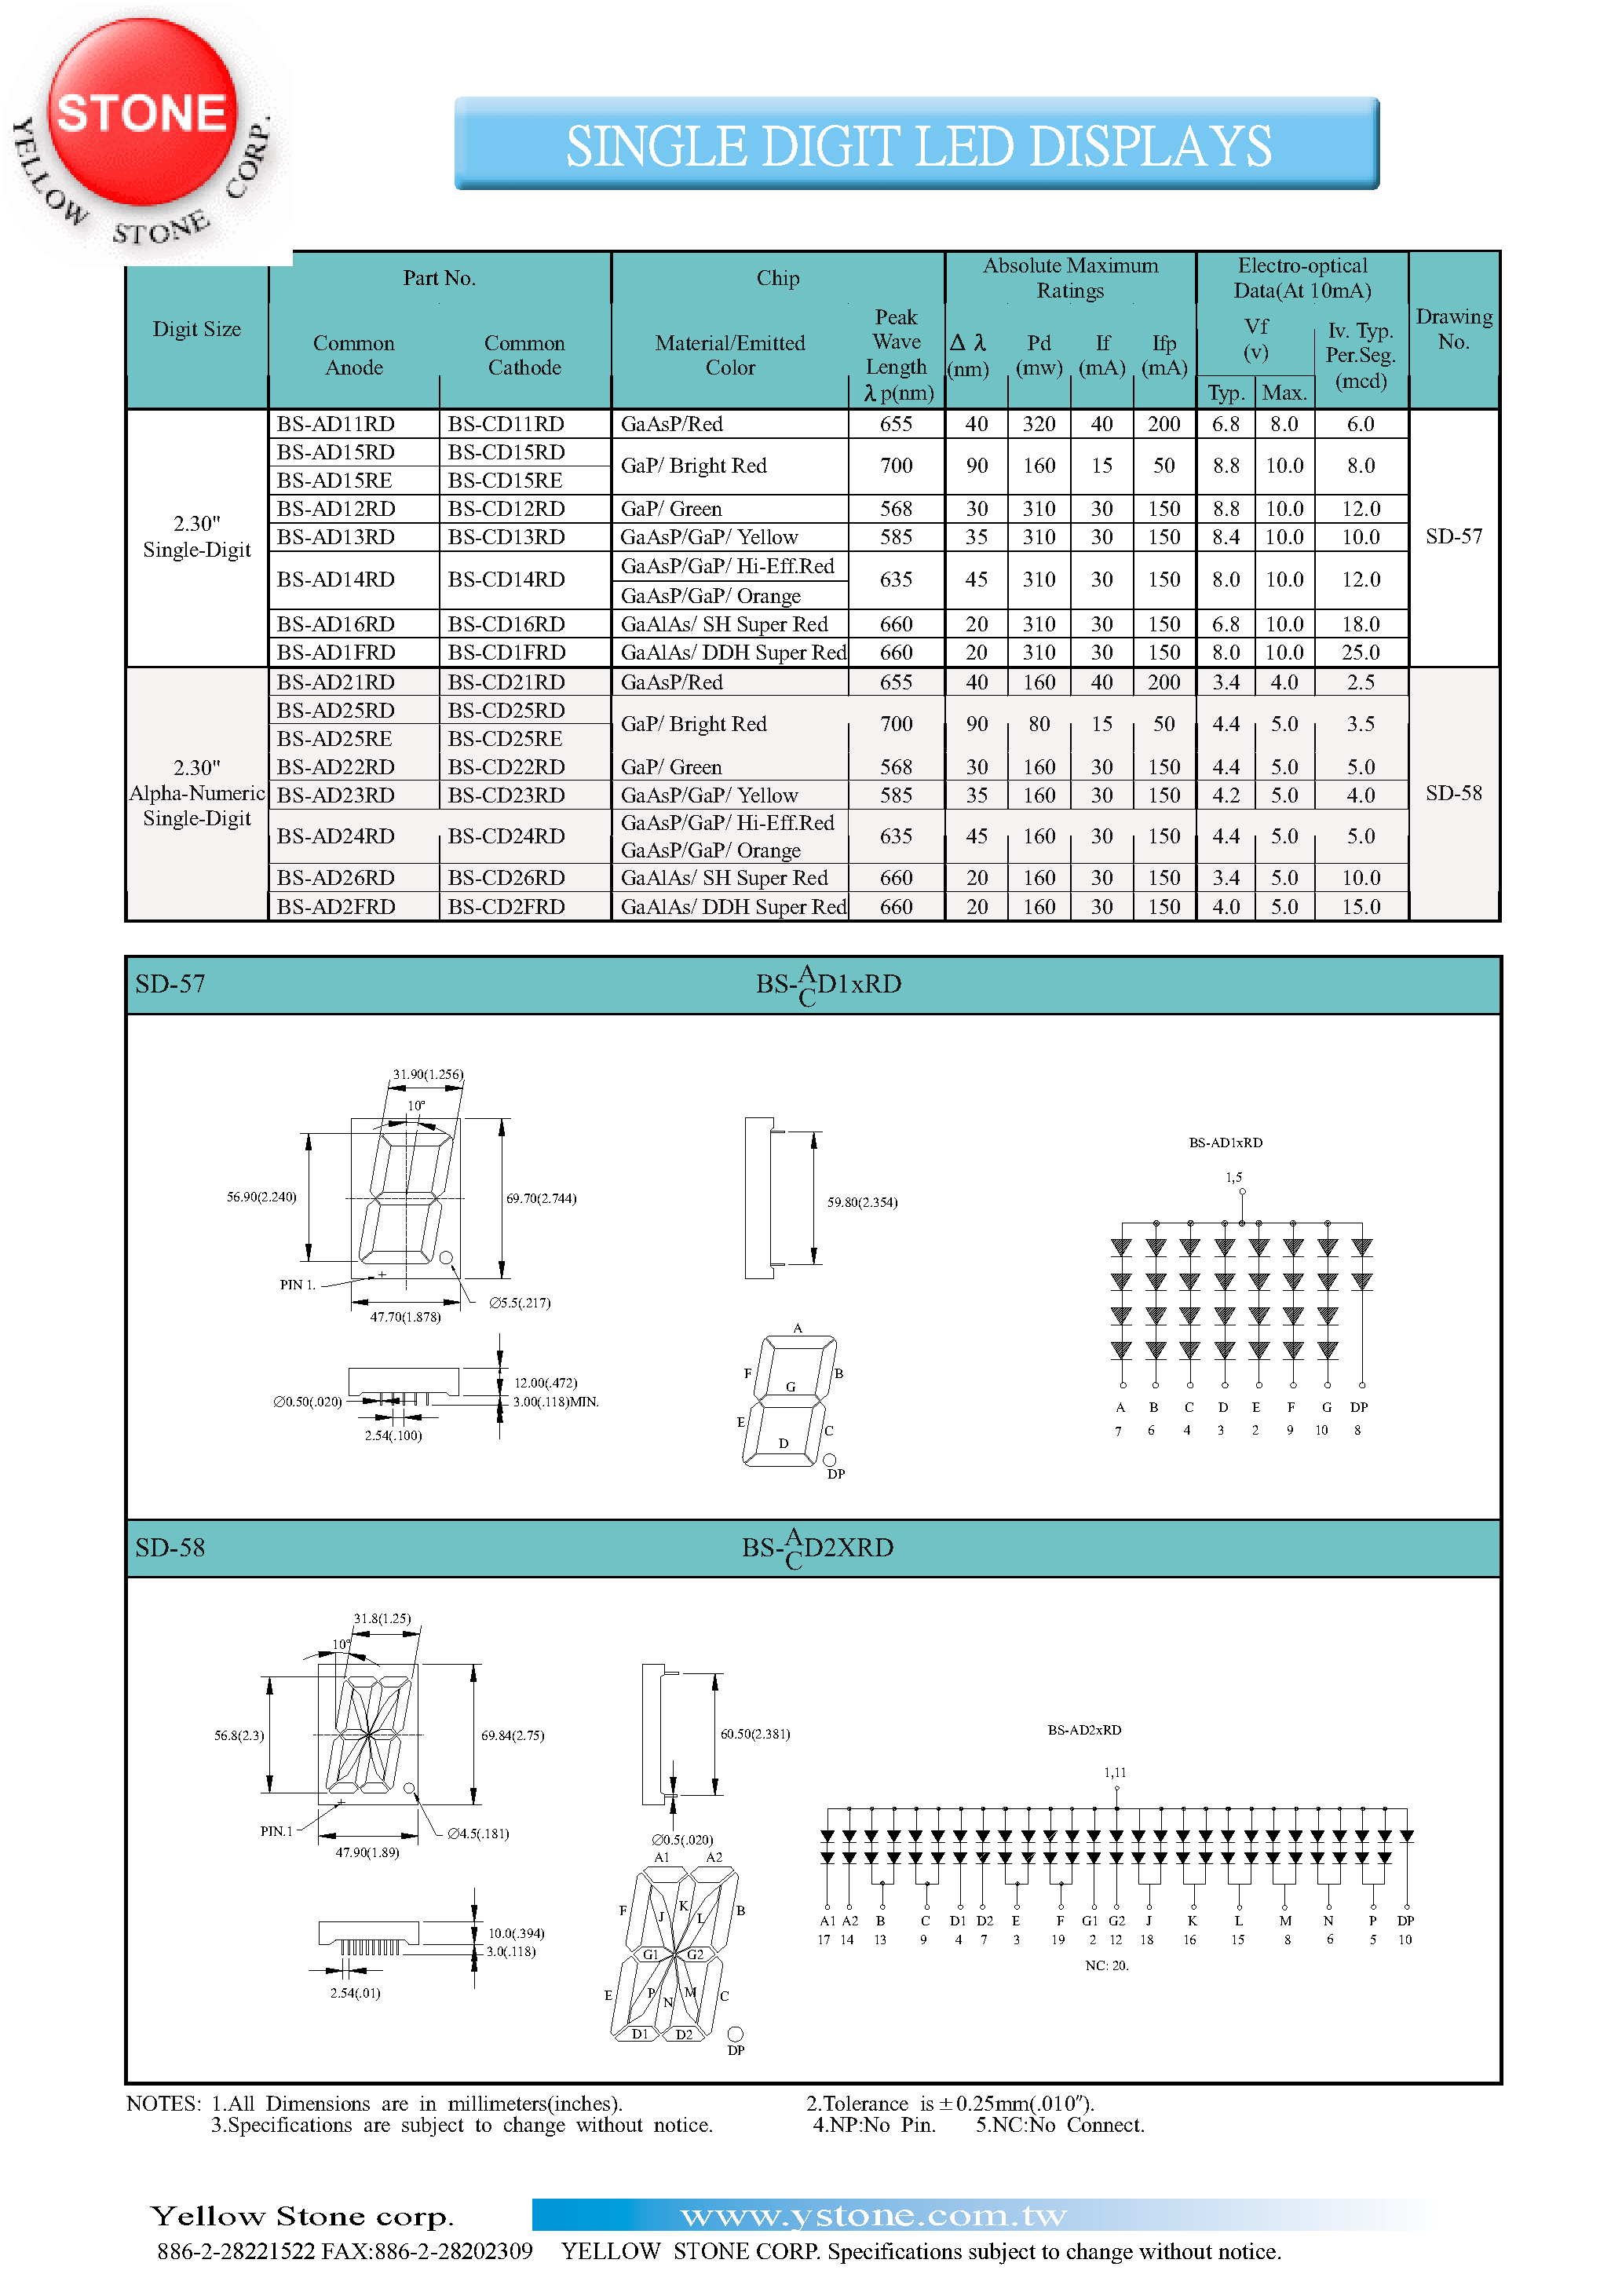 Datasheet BS-AD26RD - SINGLE DIGIT LED DISPLAYS page 1